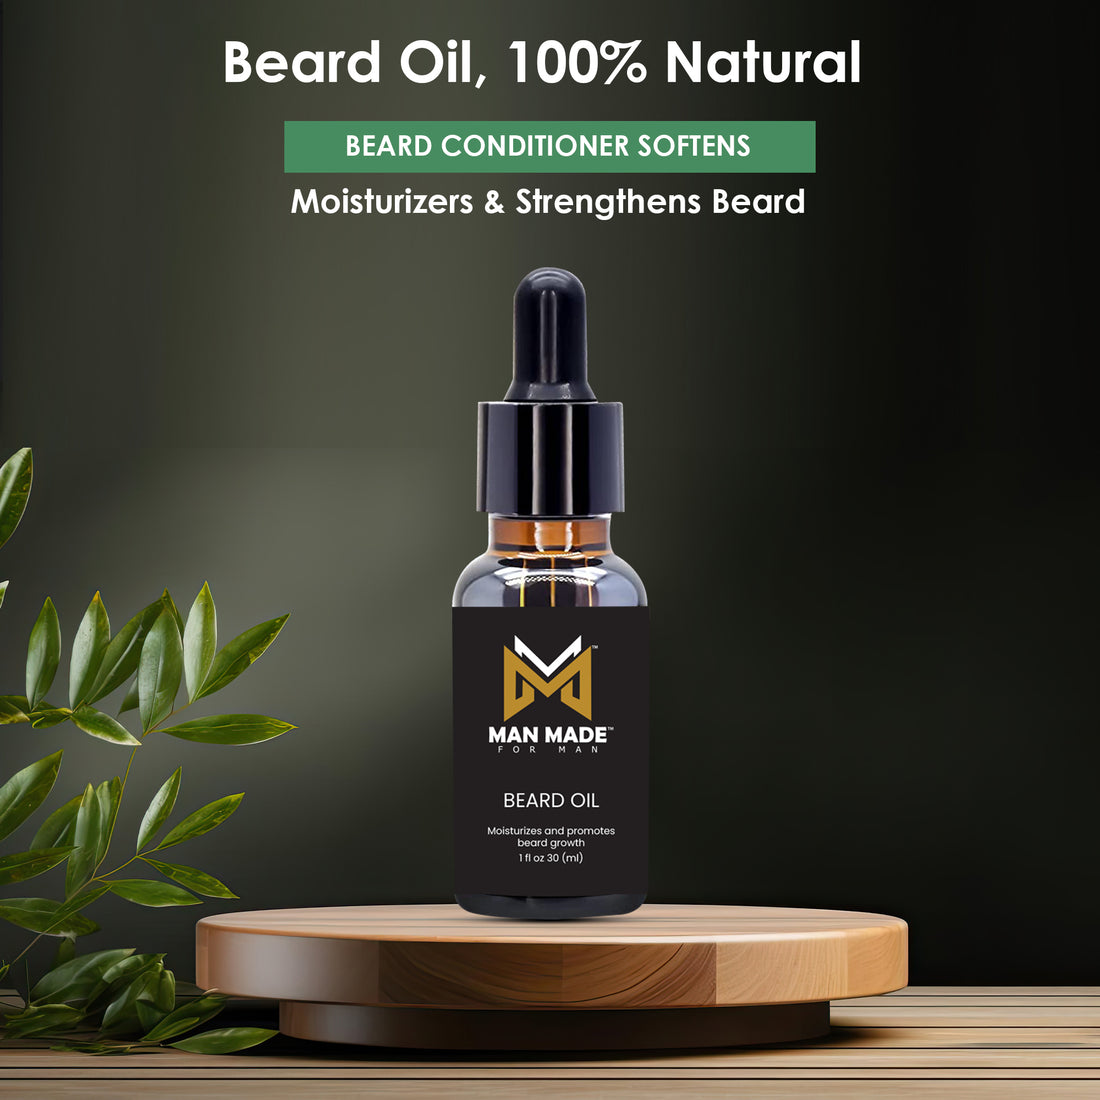 Man Made for Man Beard Oil Moisturize and Growth (1 fl oz)